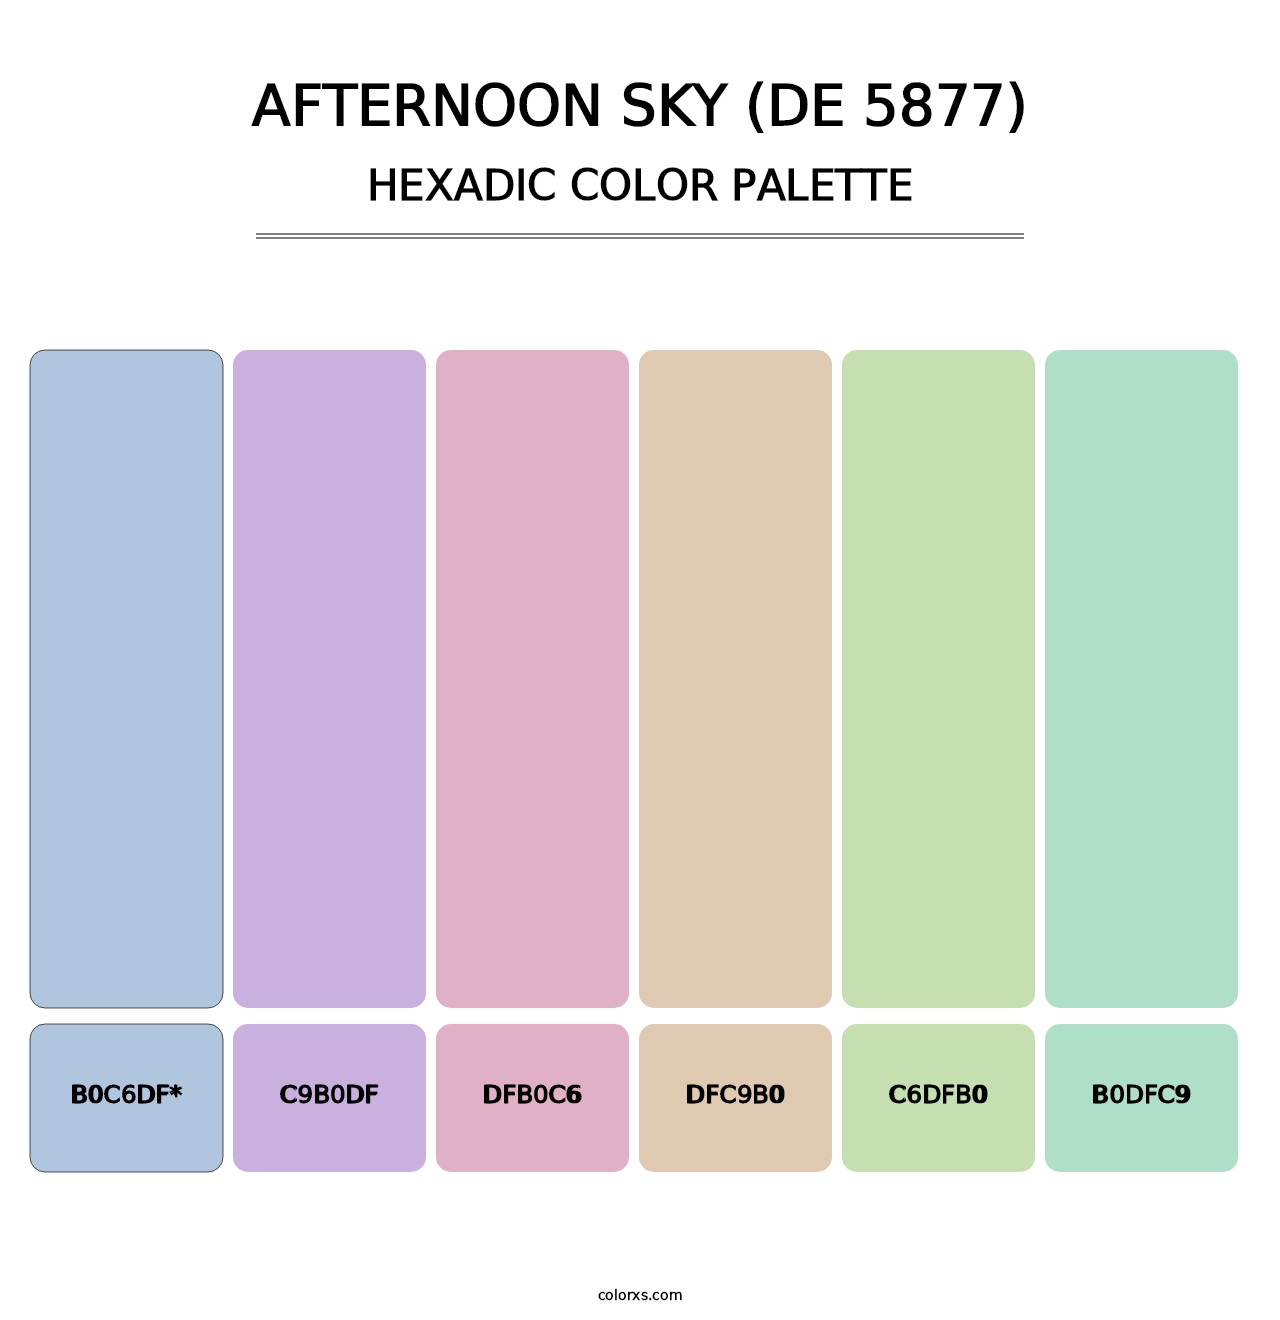 Afternoon Sky (DE 5877) - Hexadic Color Palette